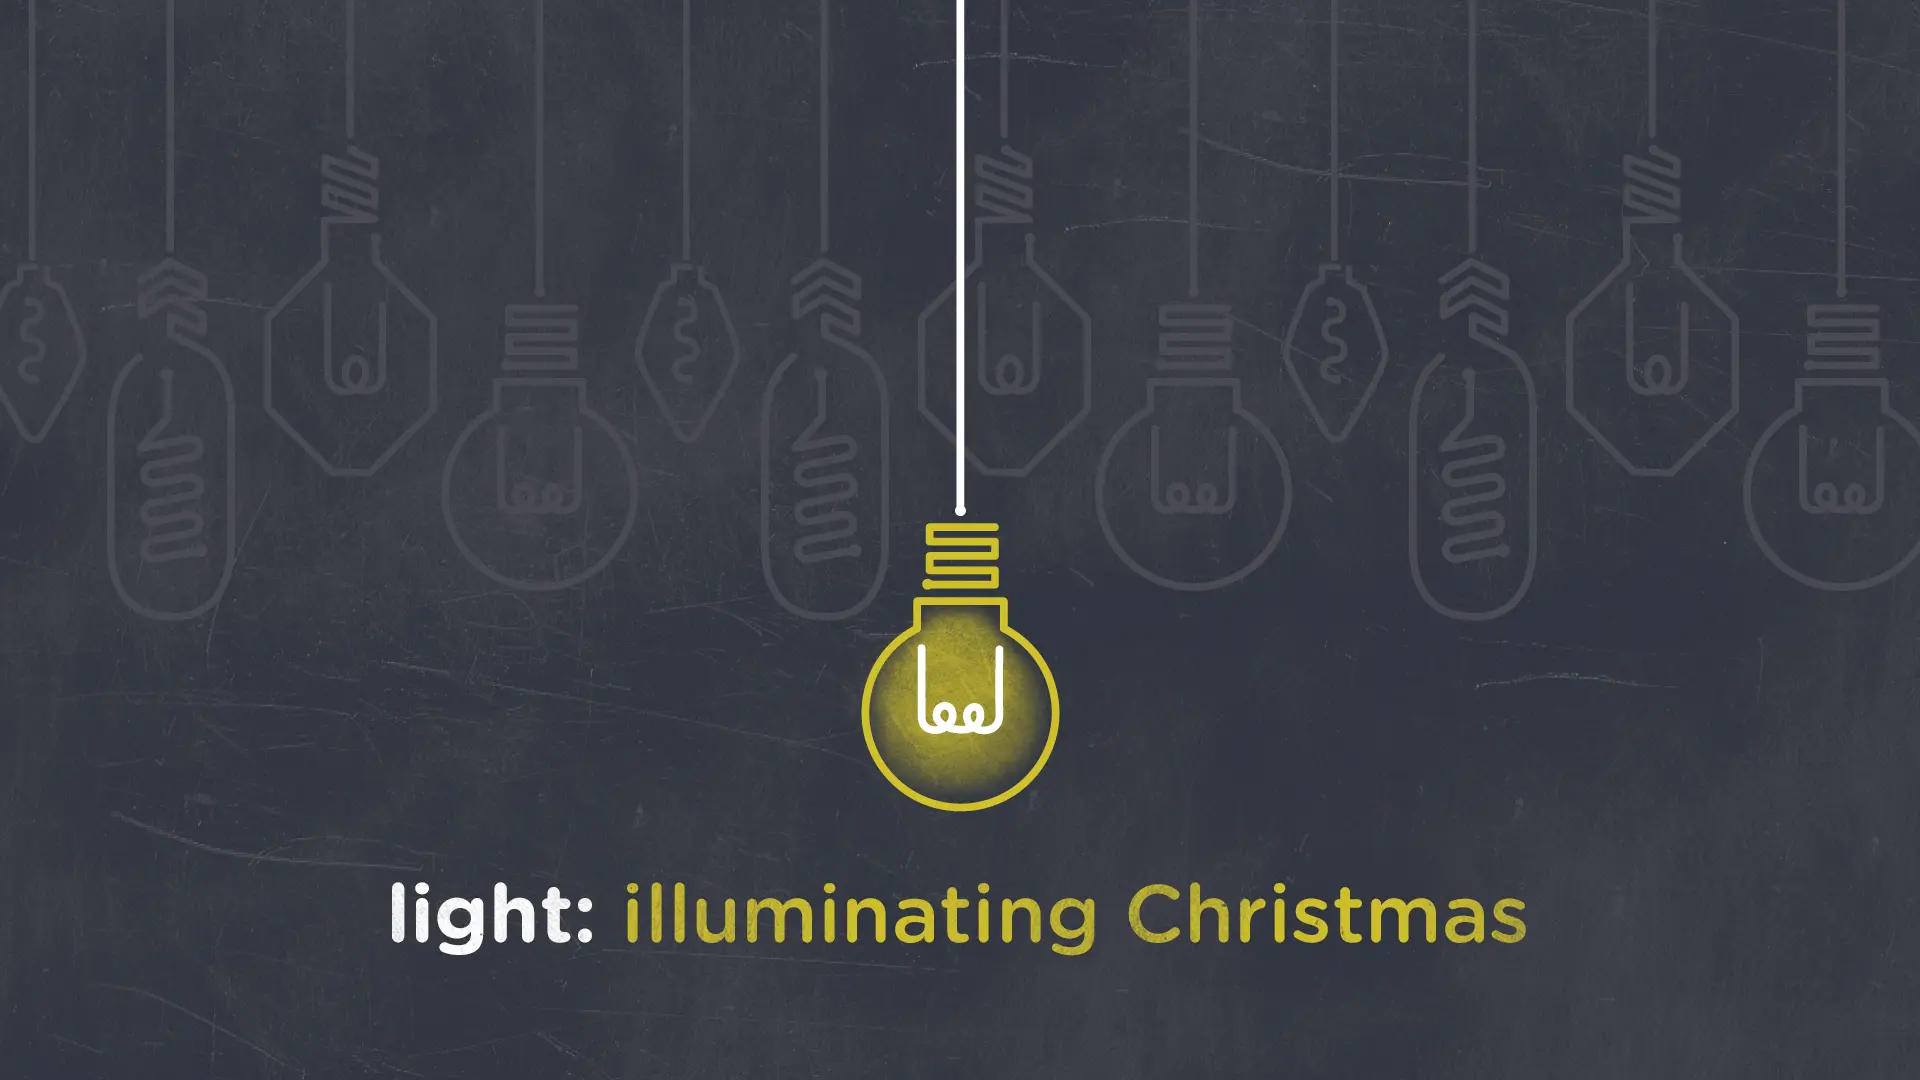 Featured image for “Light: Illuminating Christmas”